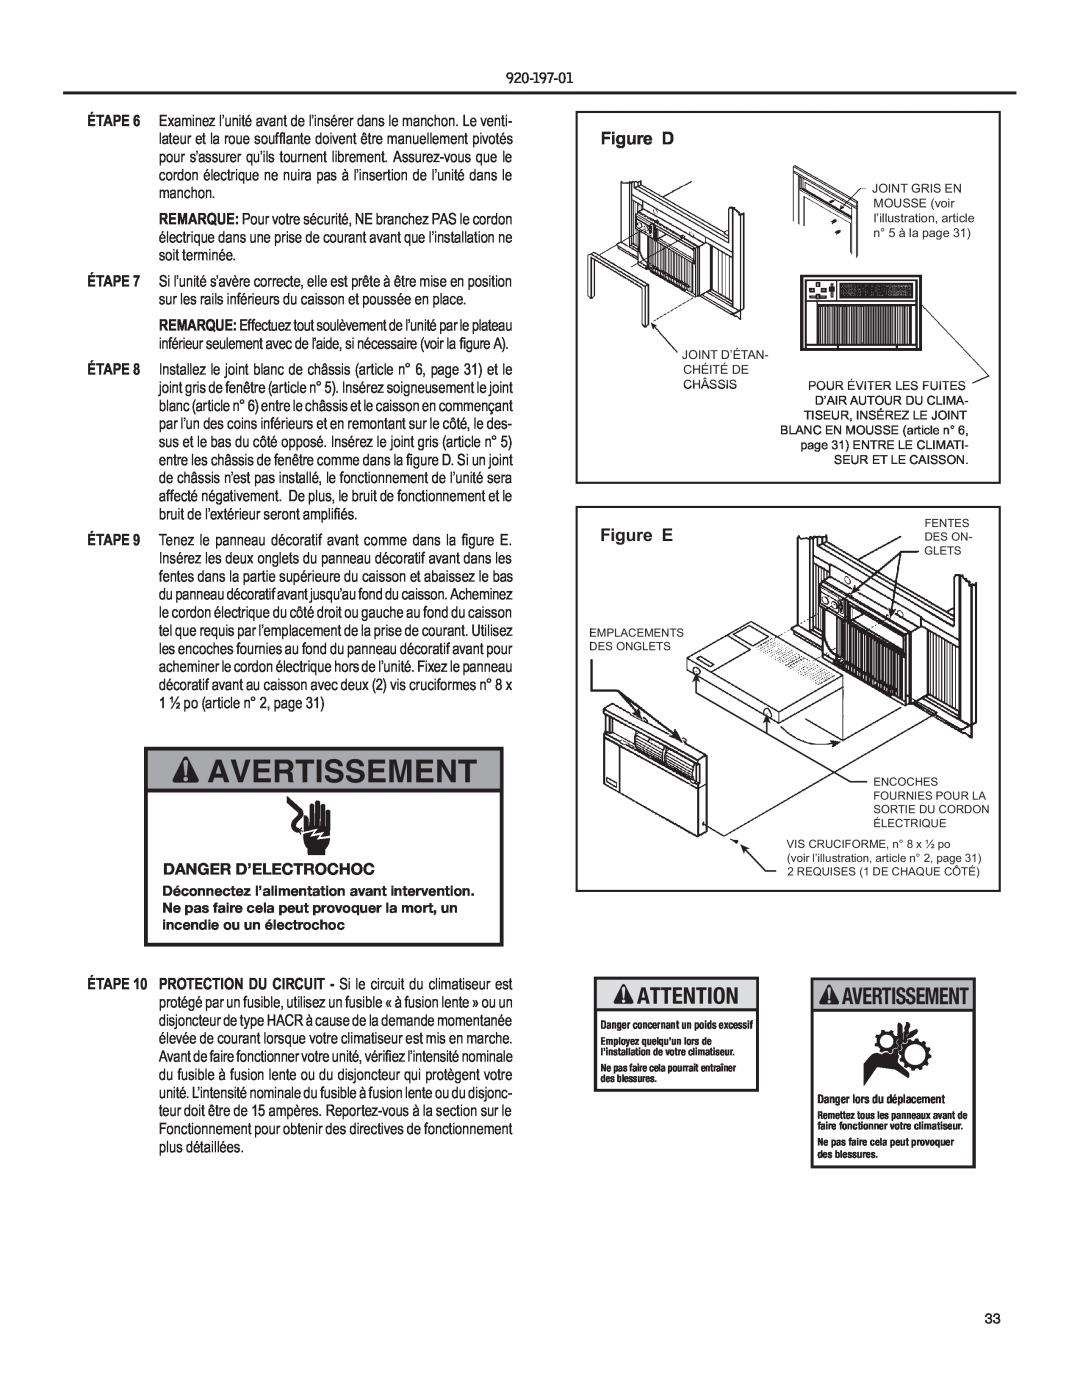 Friedrich EQ08, YQ07 operation manual Avertissement, Figure EDES ON, Figure D, Danger D’Electrochoc 